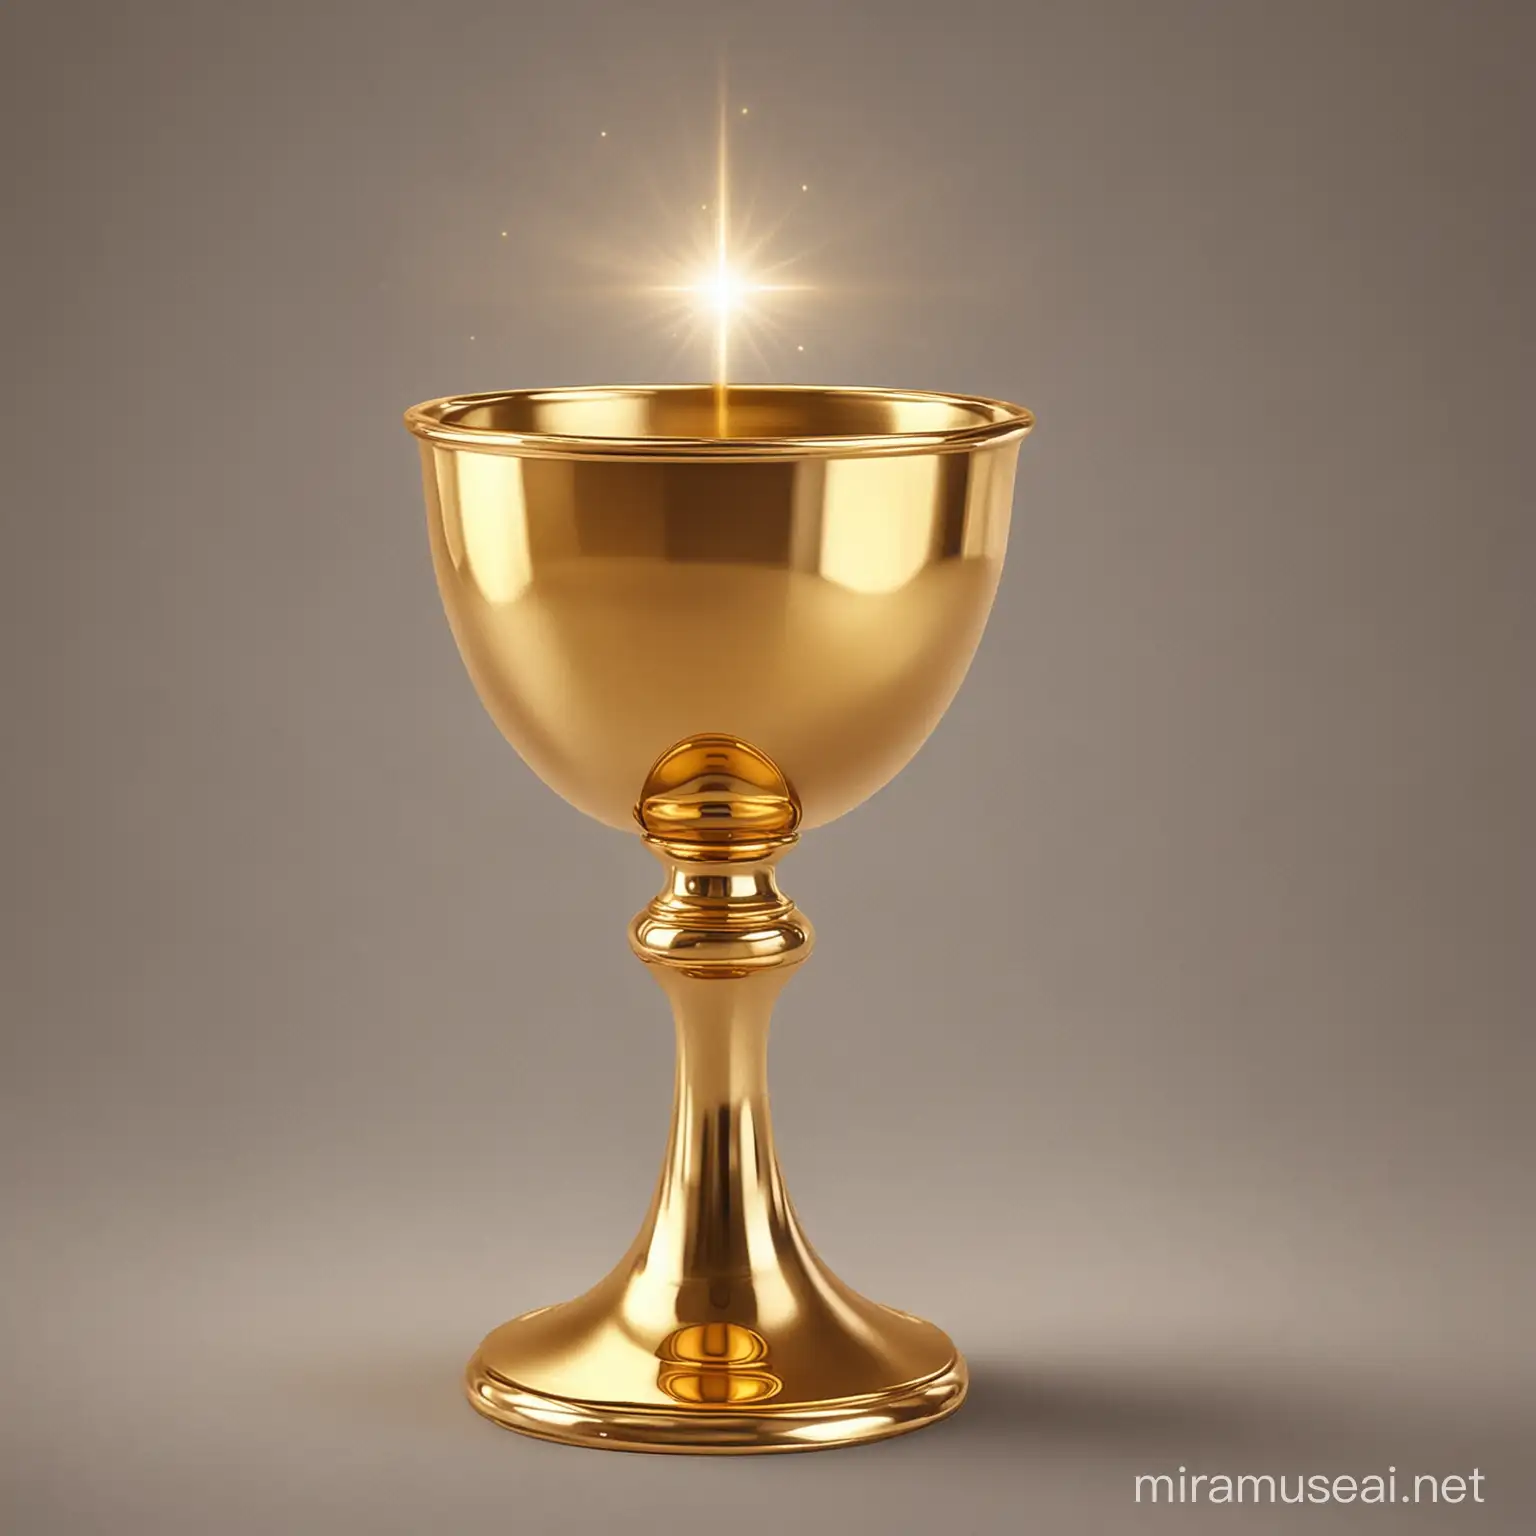 gold chalice communion
transparent background

